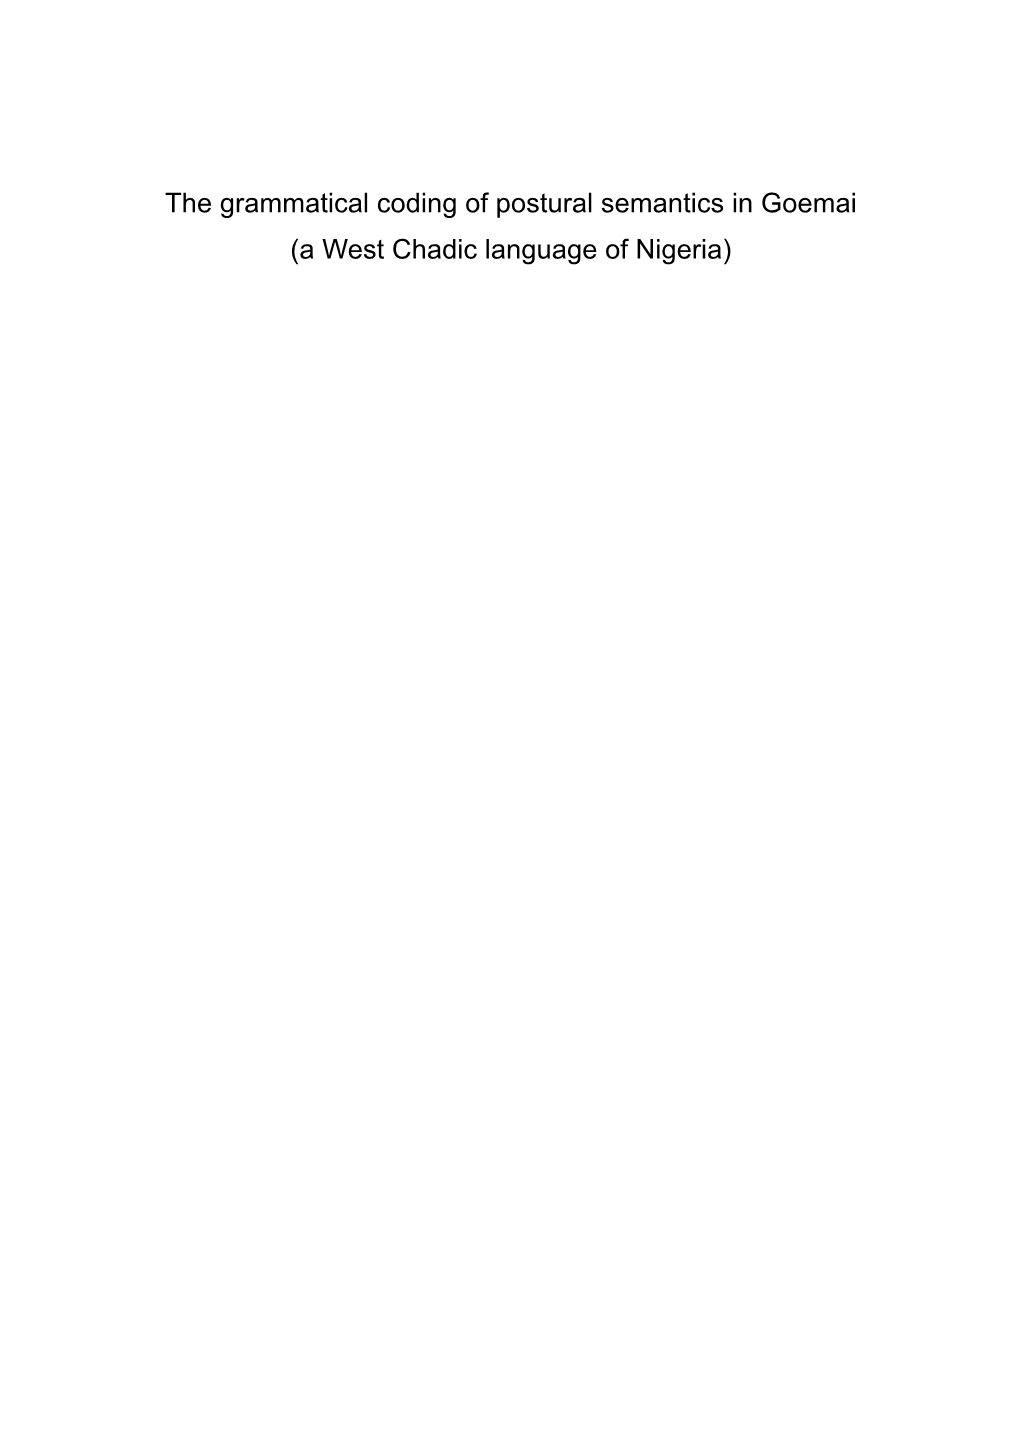 The Grammatical Coding of Postural Semantics in Goemai (A West Chadic Language of Nigeria)